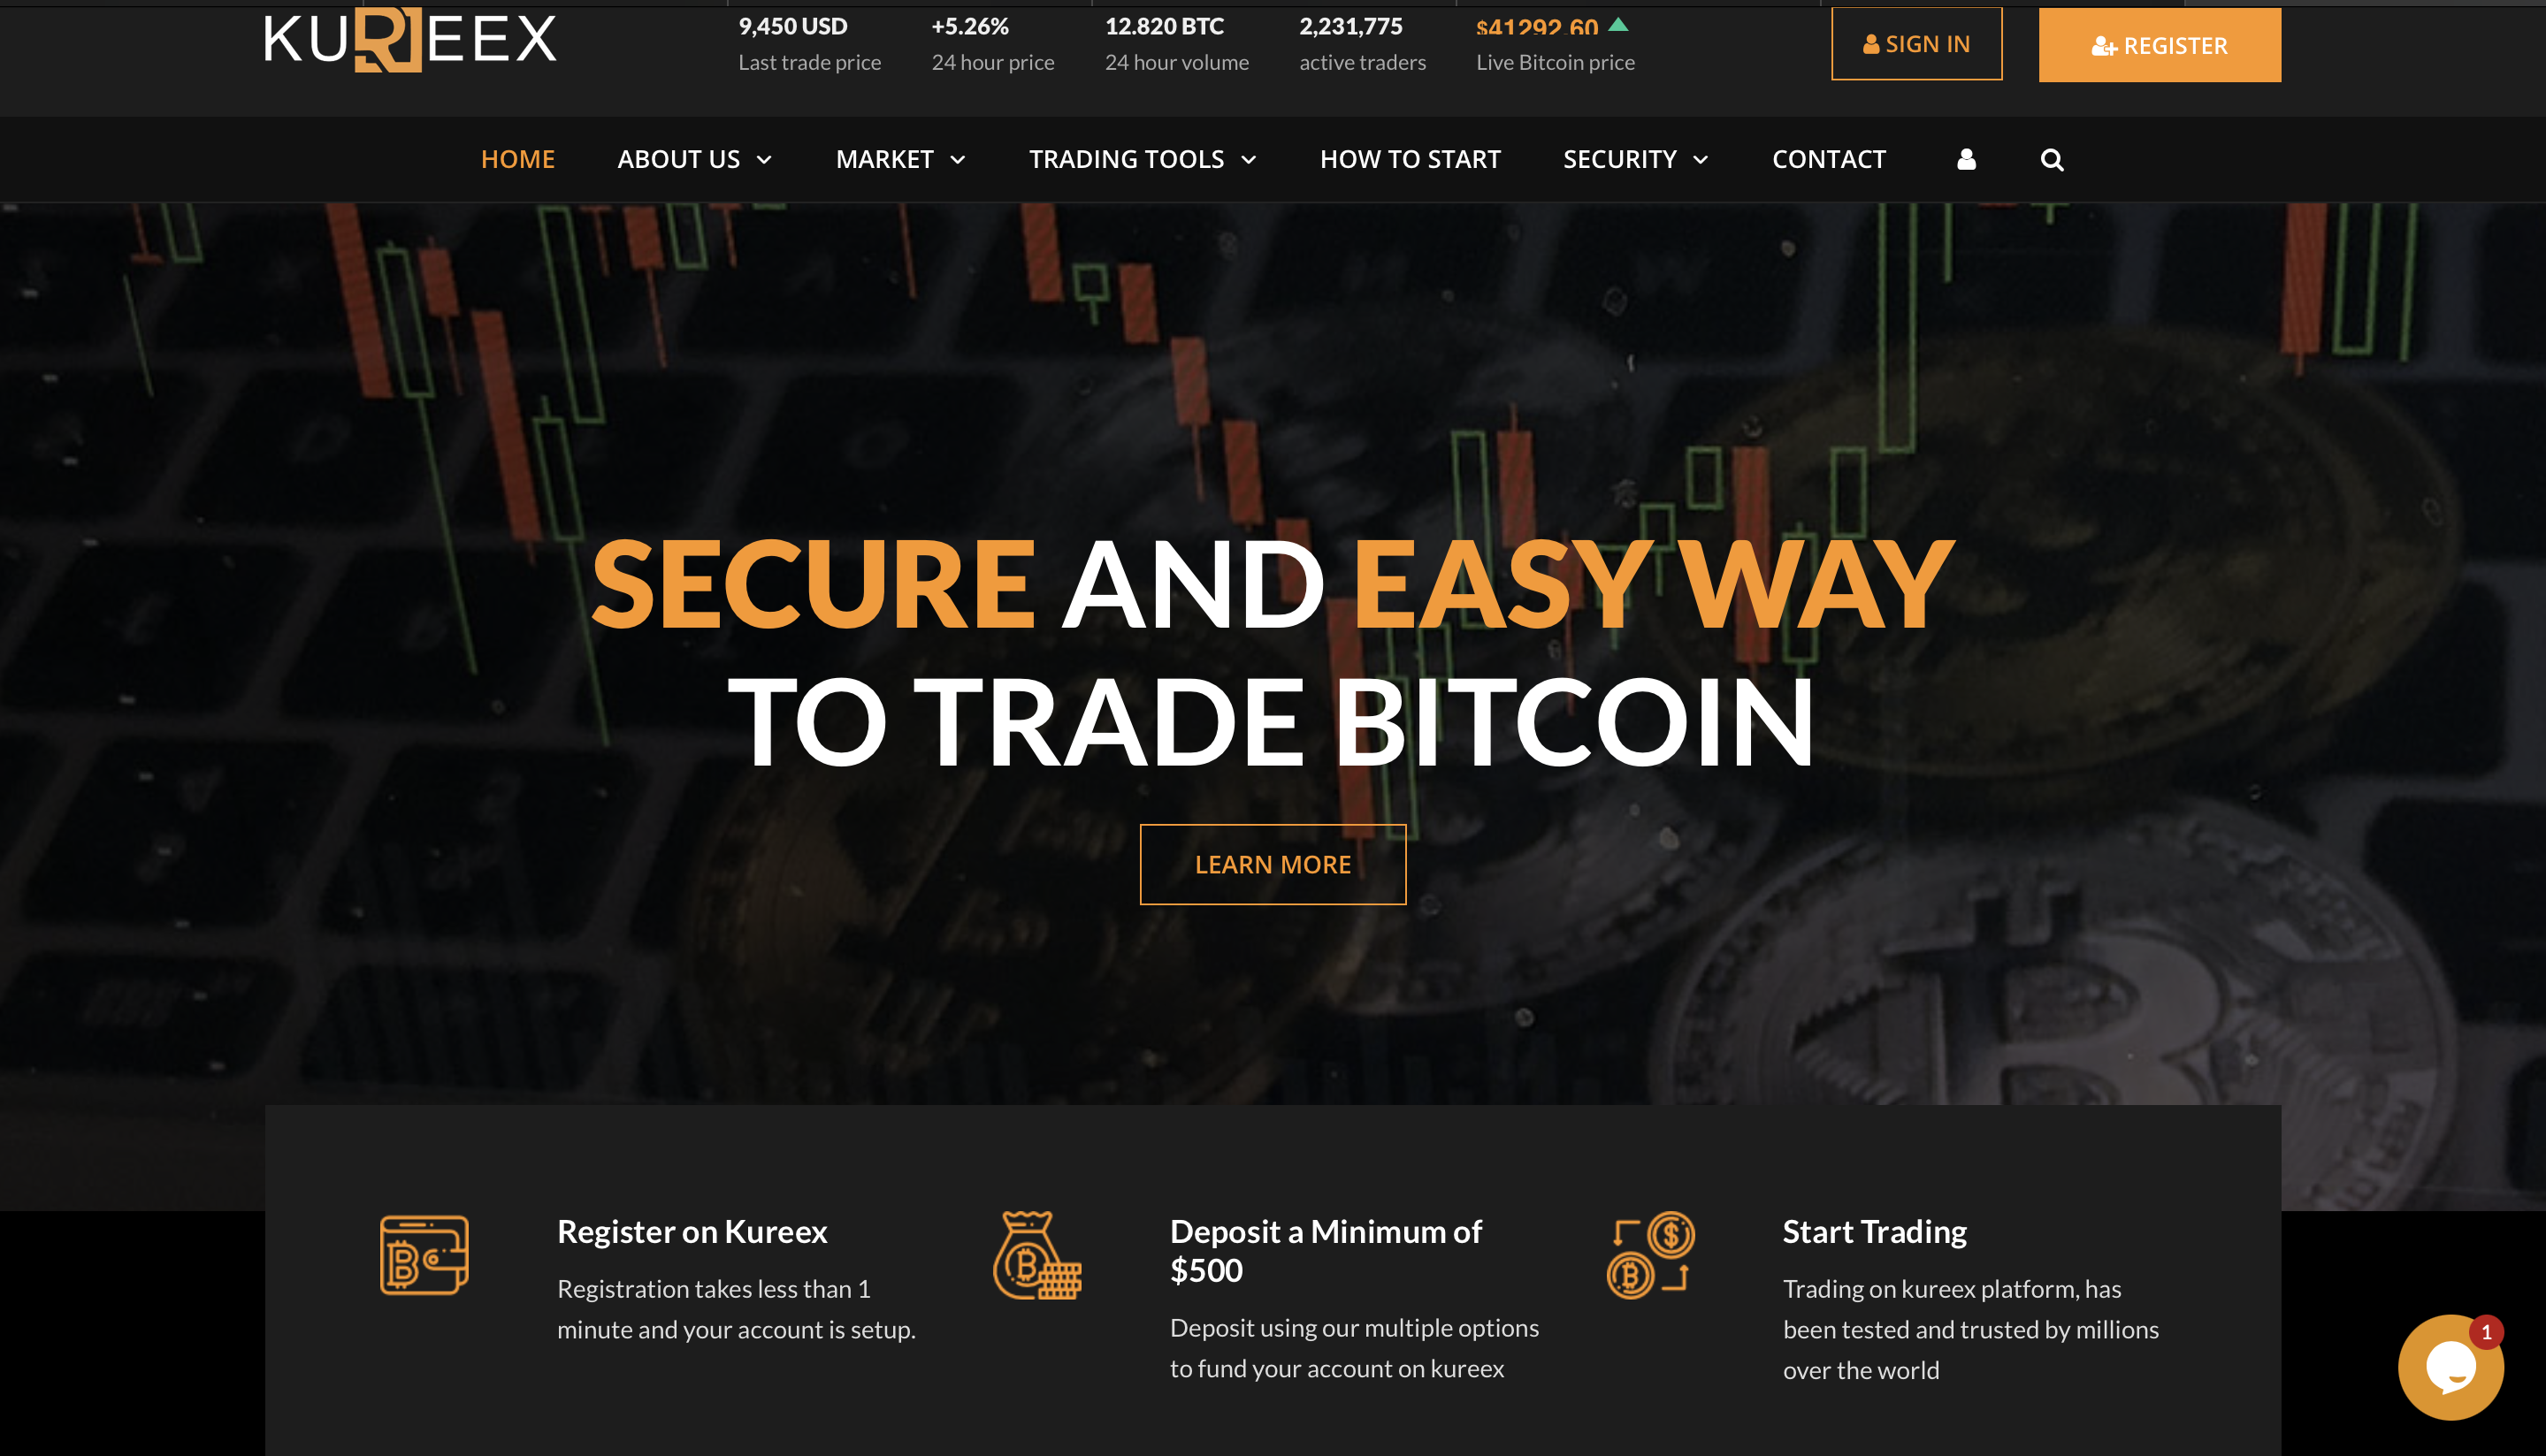 Kureex — A Well Established and Reputable Crypto Exchange